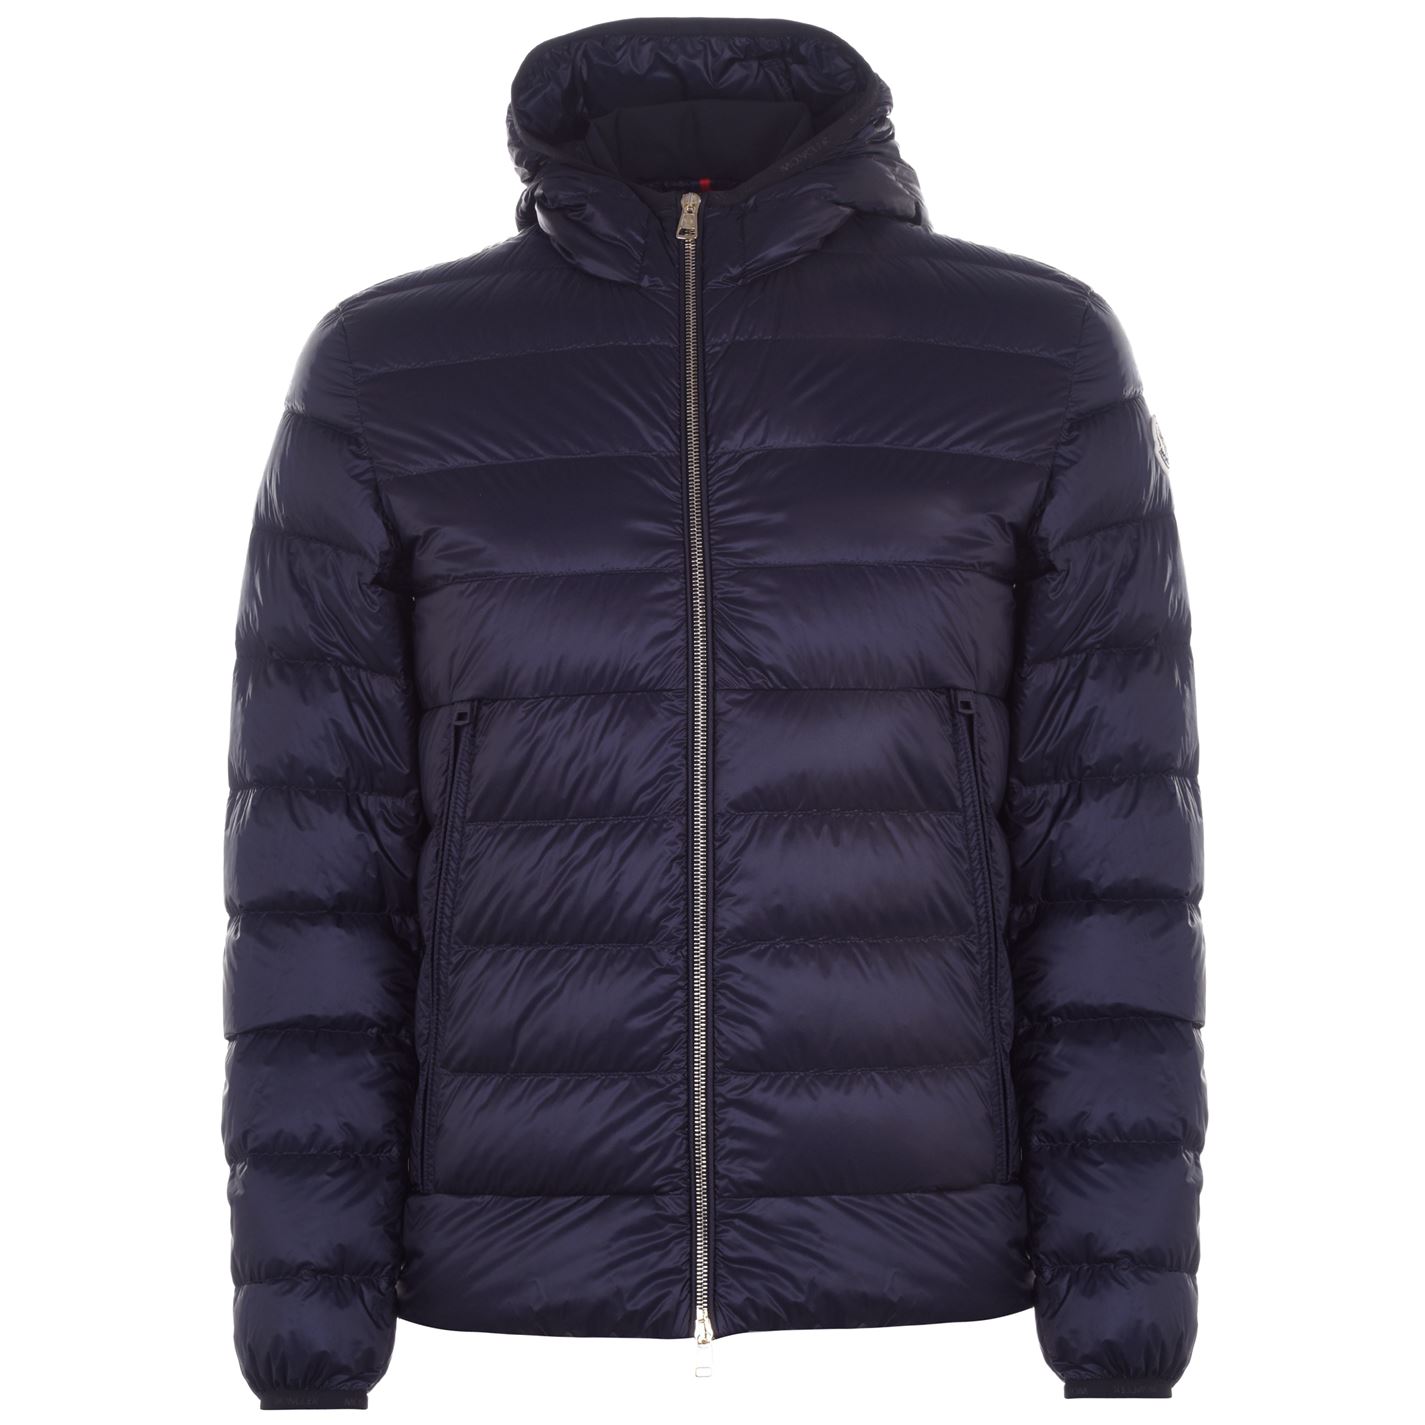 moncler Emas Jacket Navy – high quality cheap moncler jackets